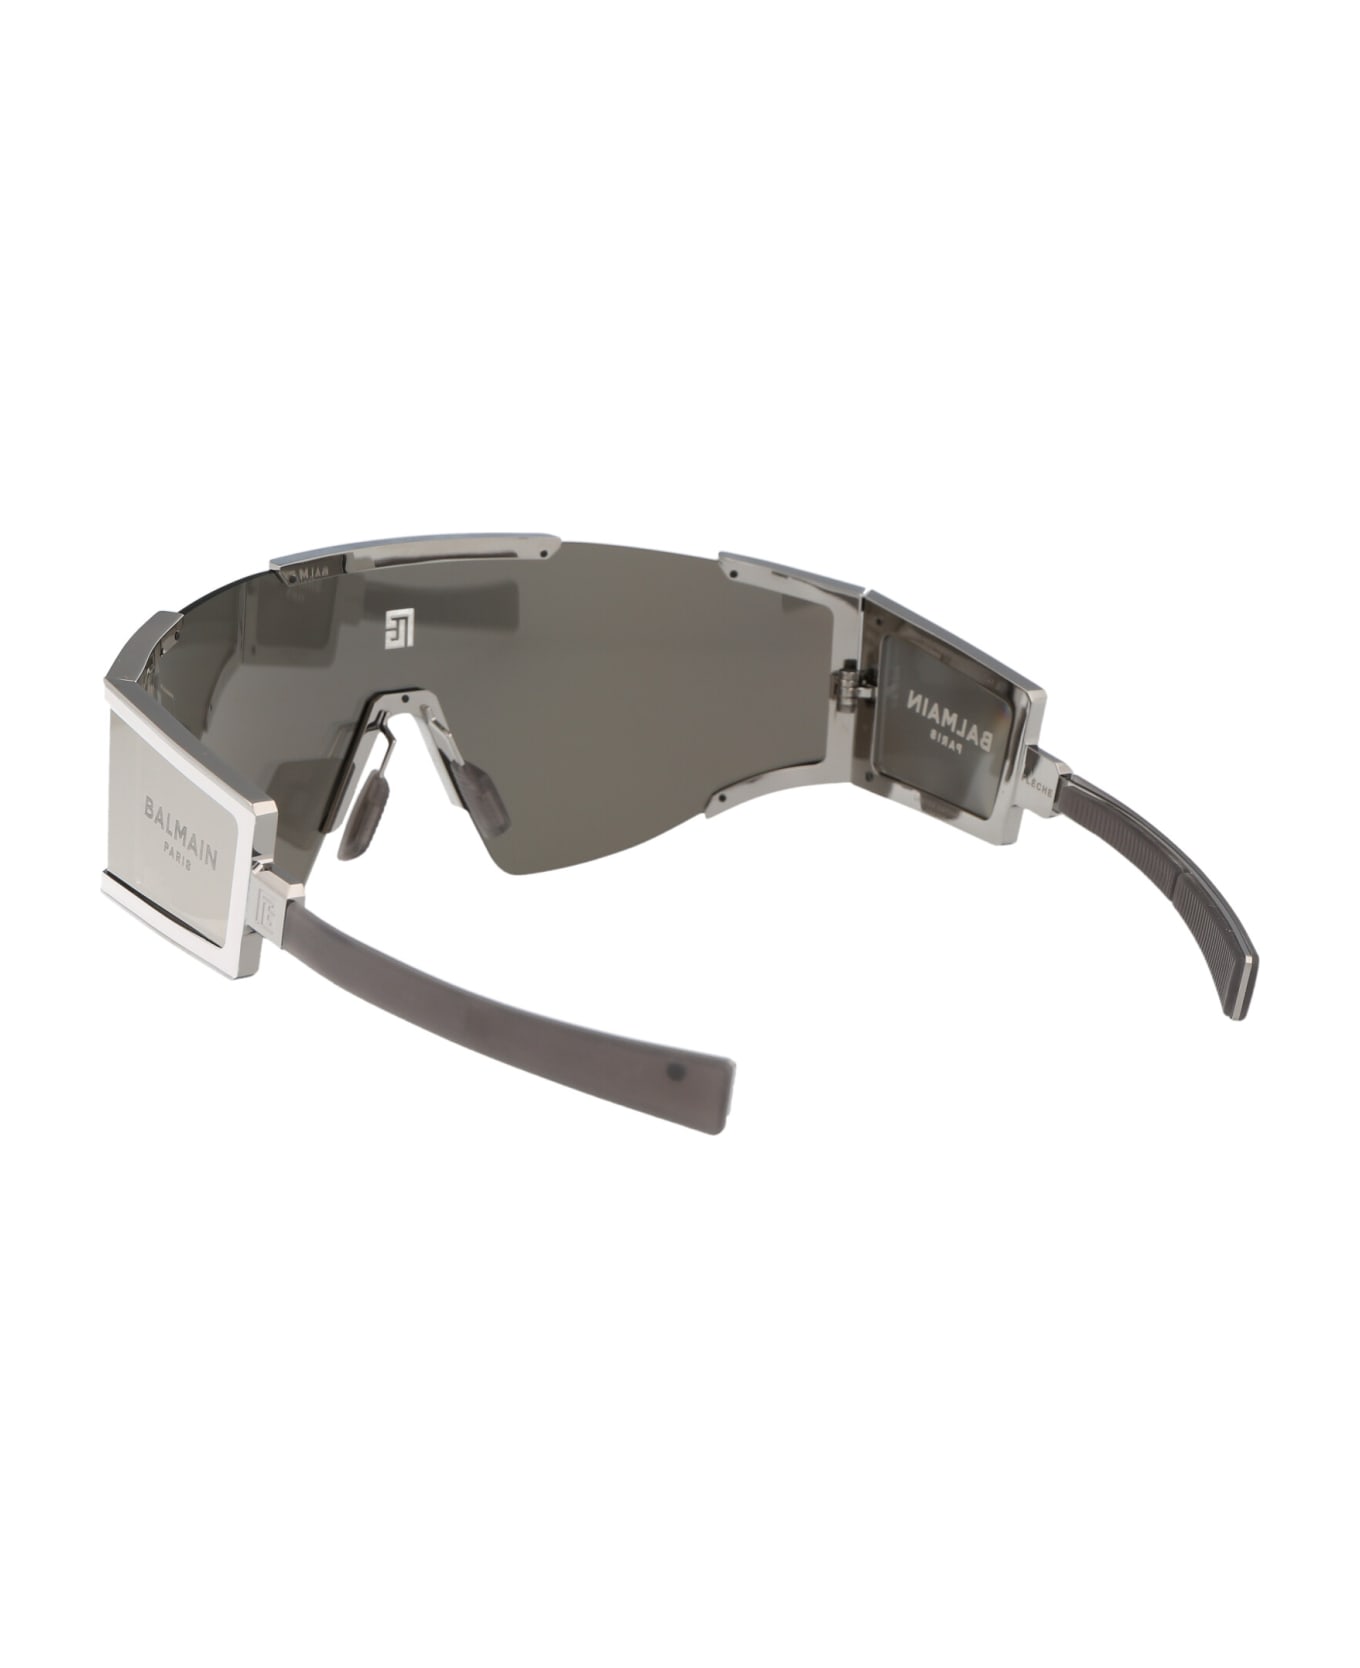 Balmain Fleche Sunglasses - 138D PLD - GRY サングラス